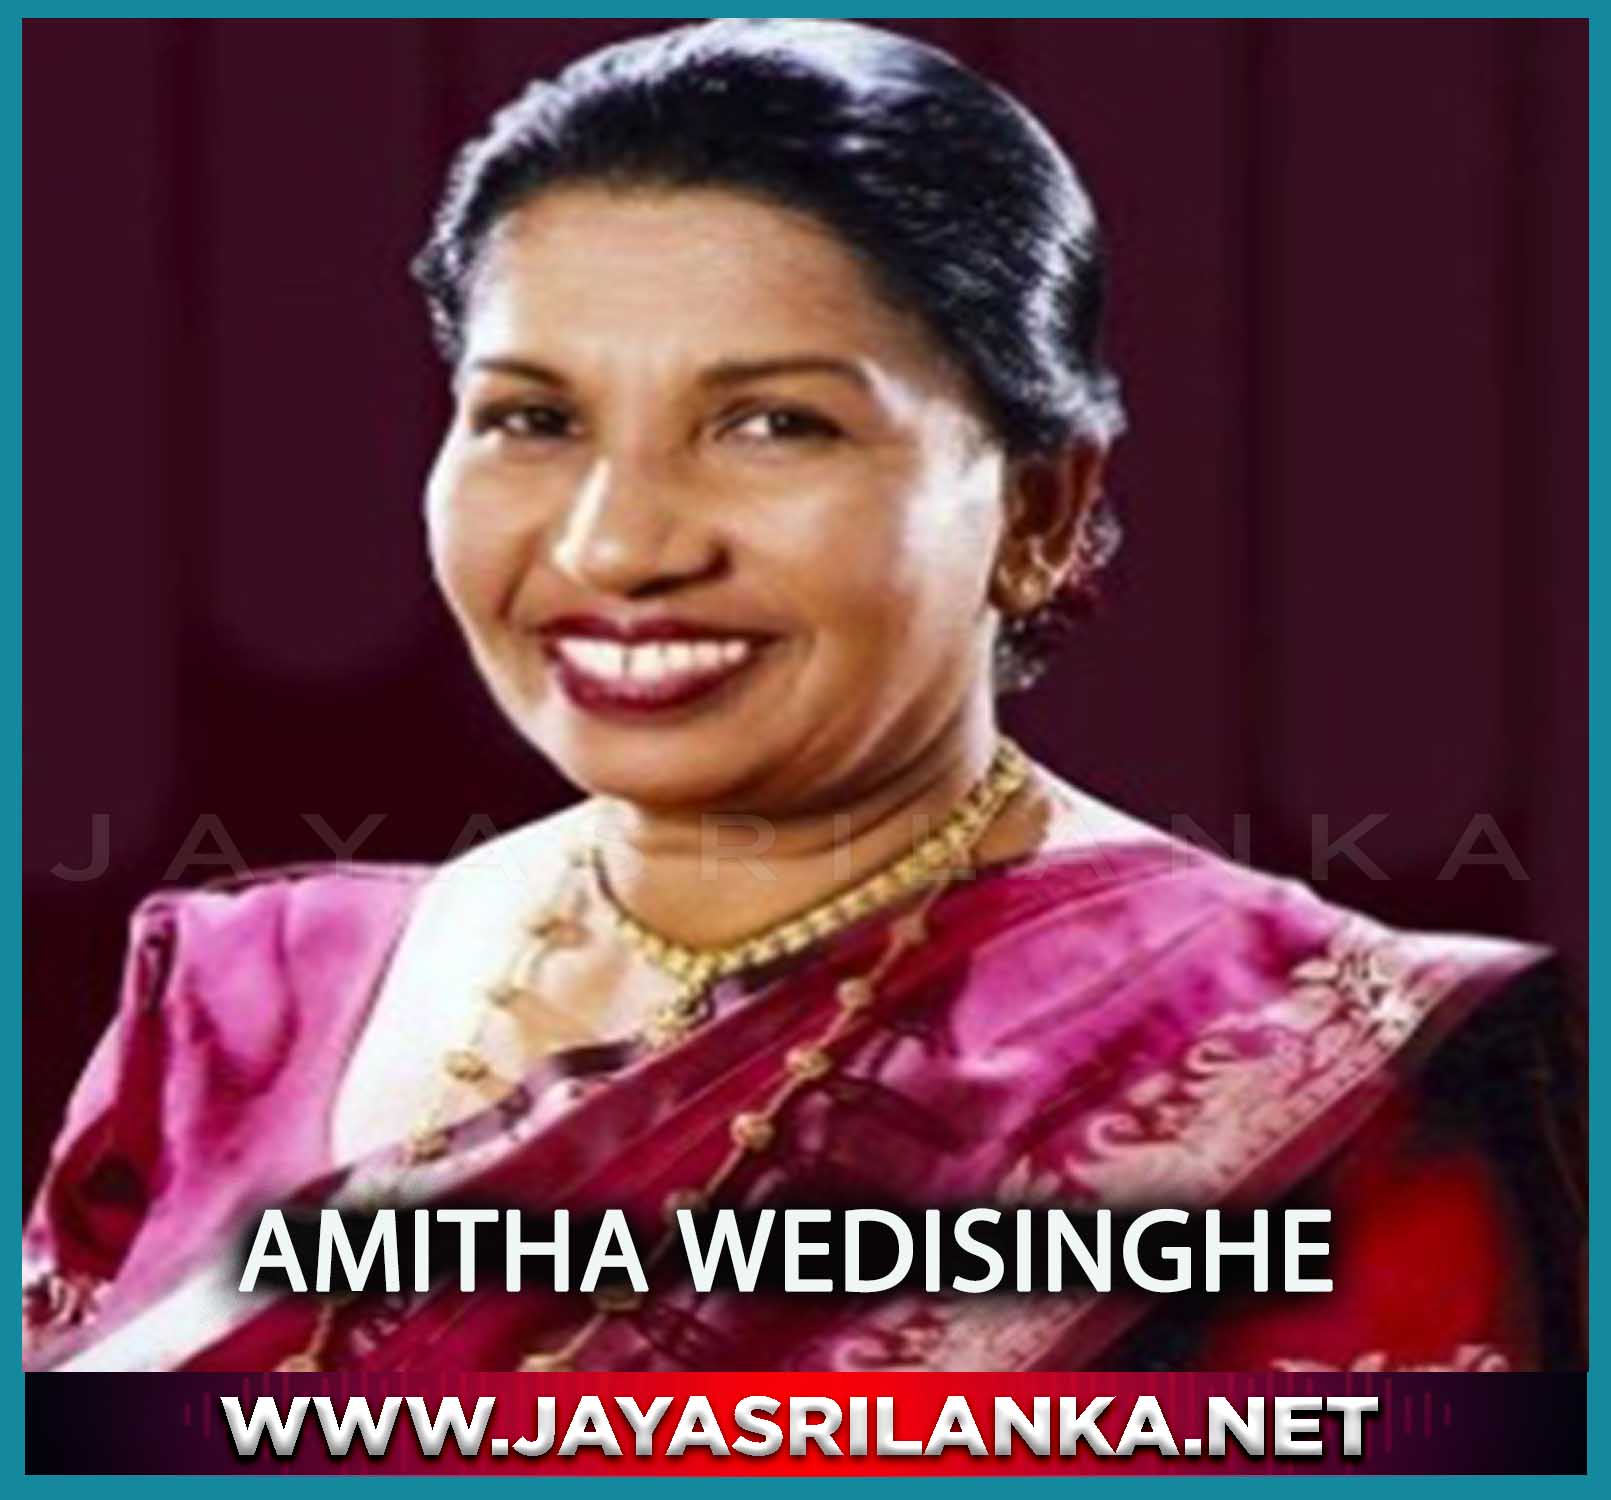 Adara Charika - Amitha Wedisinghe mp3 Image